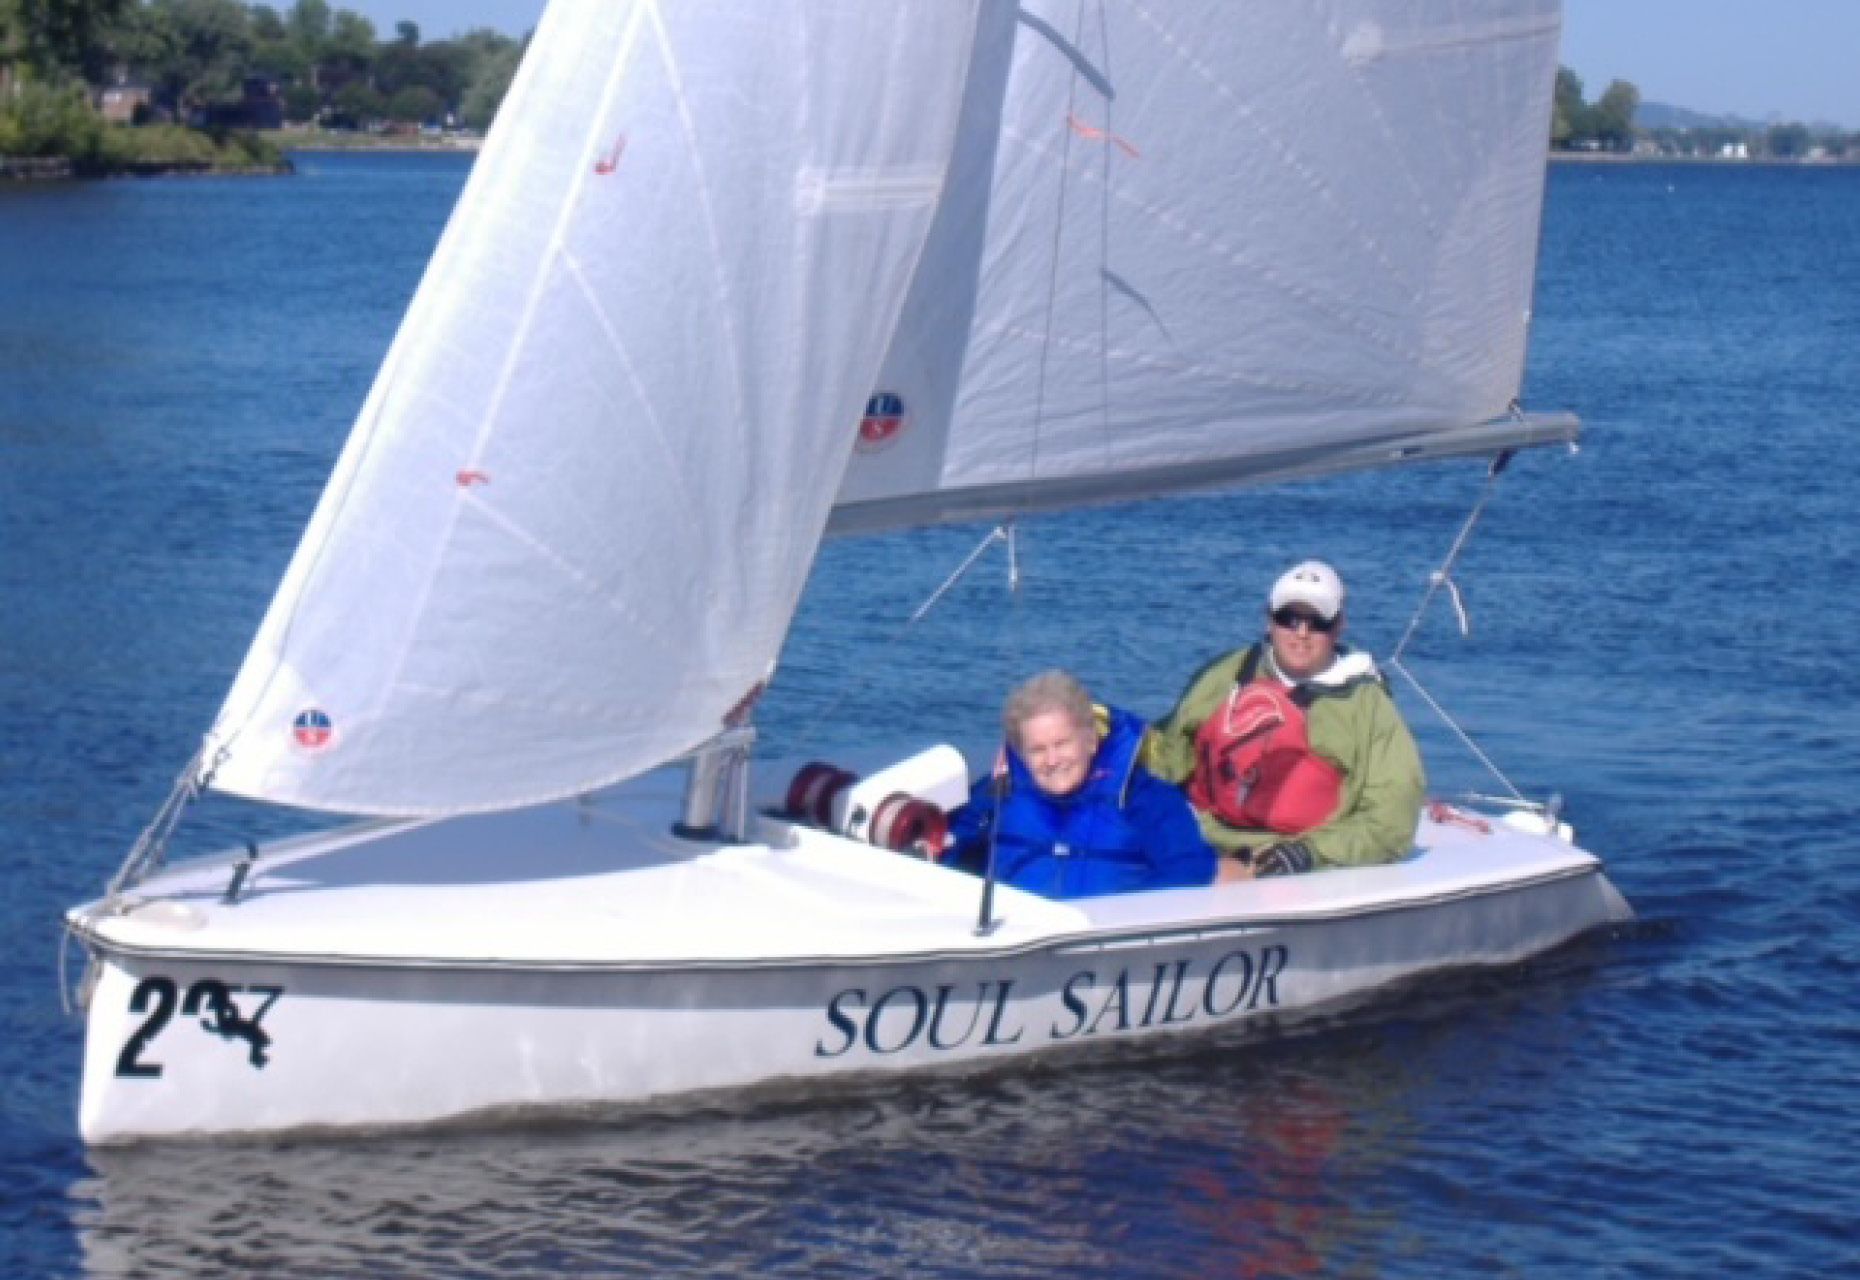 Judy Winship in a Martin 16 sailboat with a sailing companion